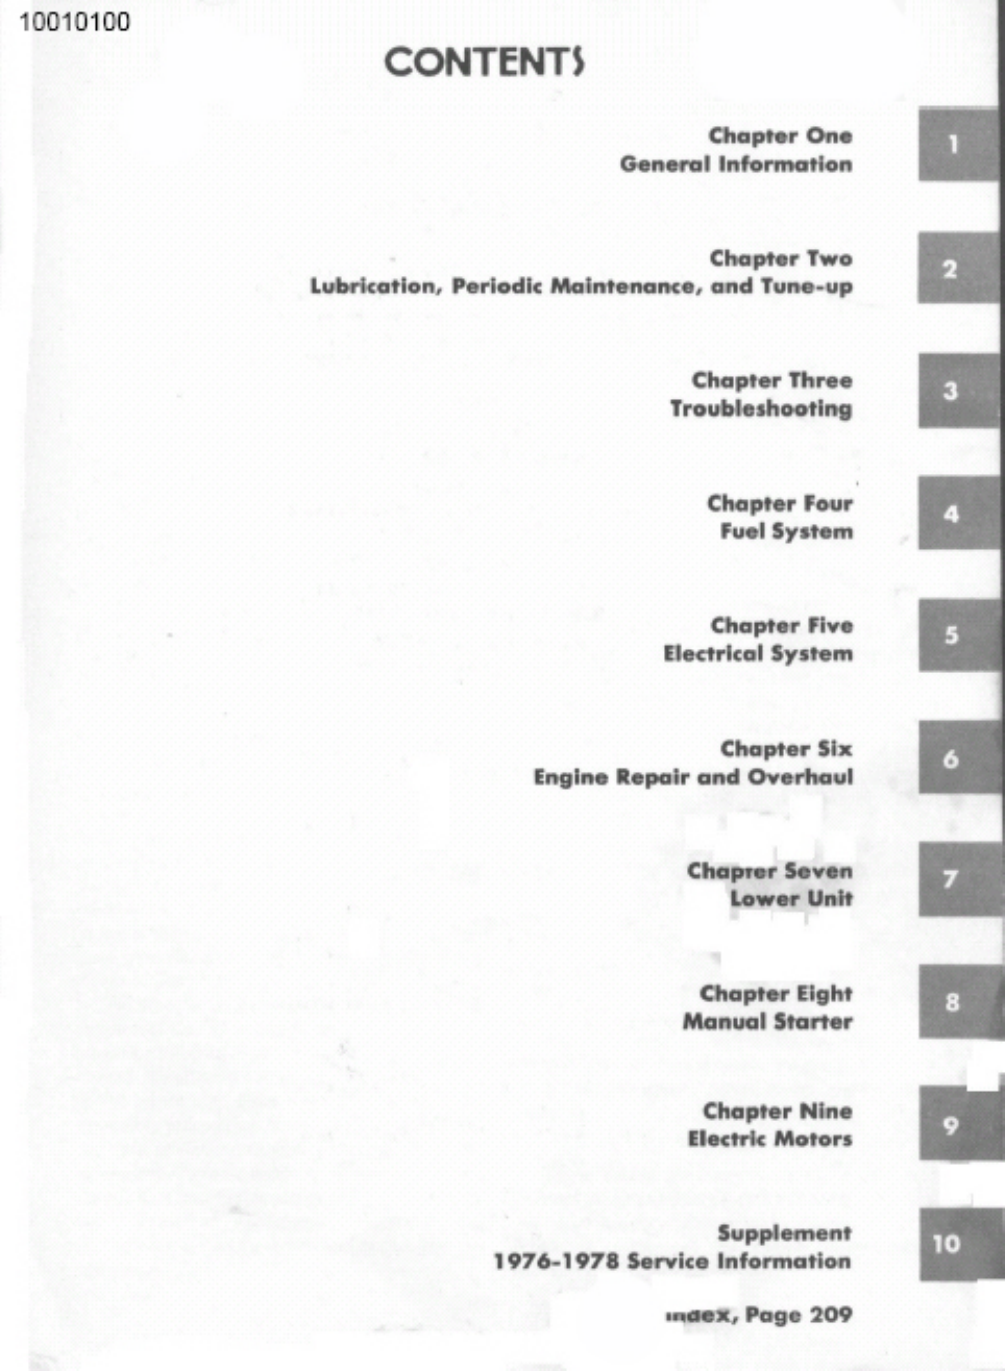 1965-1978 Evinrude Johnson 1.5hp, 2hp, 3hp, 4hp, 5hp, 6hp, 9.5hp, 9.9hp, 15hp, 18hp, 25hp, 33hp, 35hp outboard motor service repair handbook Preview image 2